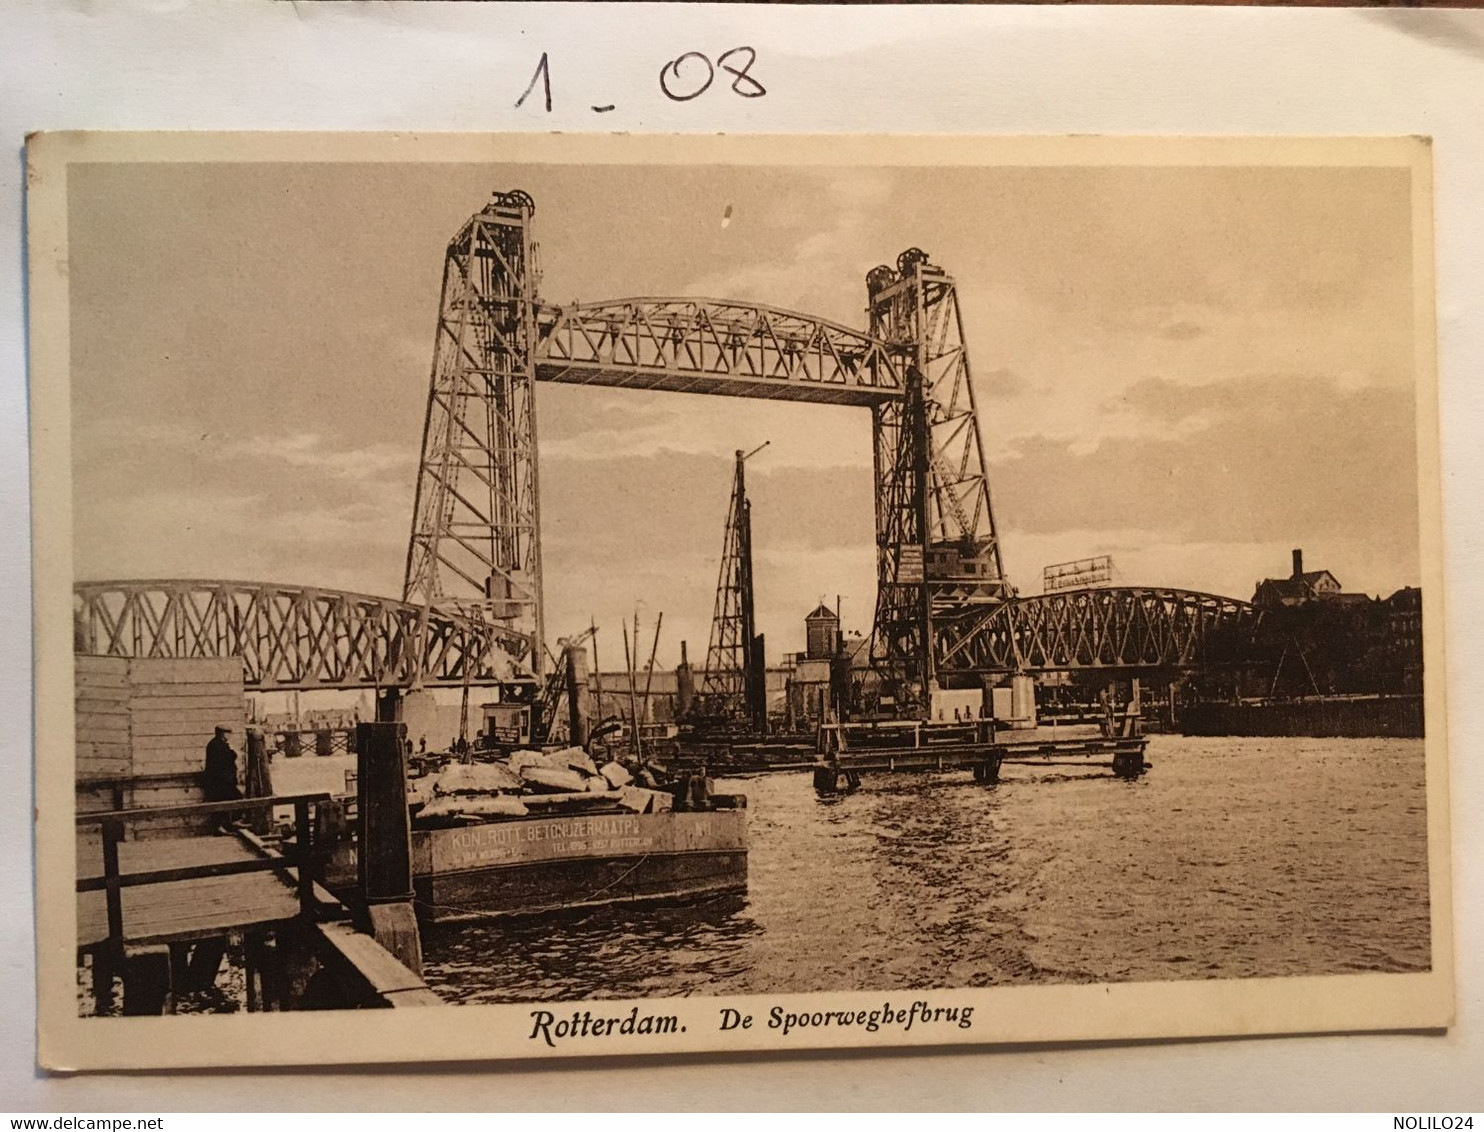 Cpa, Rotterdam - De Spoorweghefbrug, éd Artur Klizsch, N° 623, Non écrite - Rotterdam